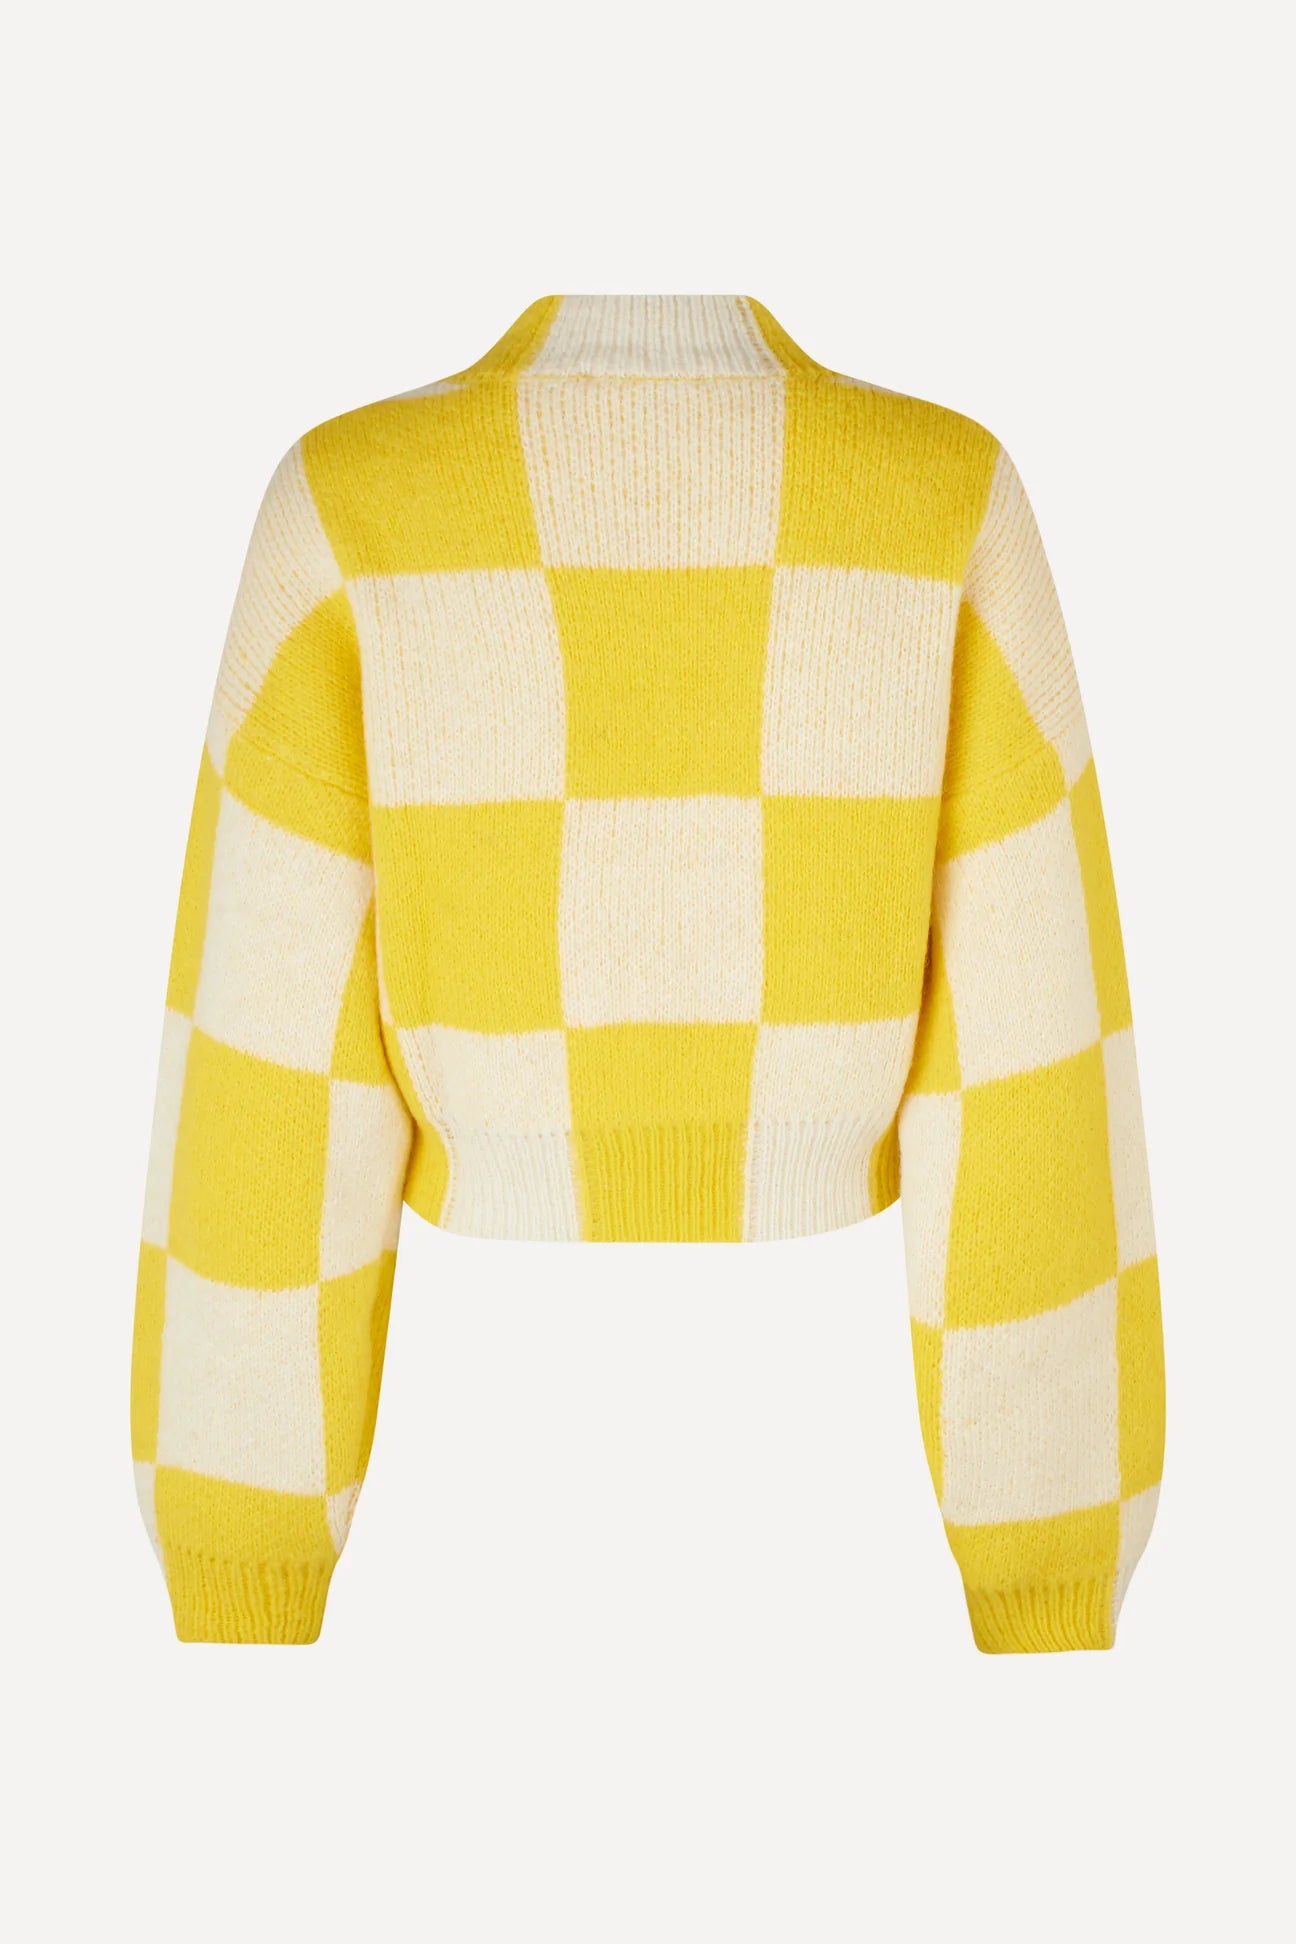 Stine Goya Francesca Adonis Sweater - Sunrise Check